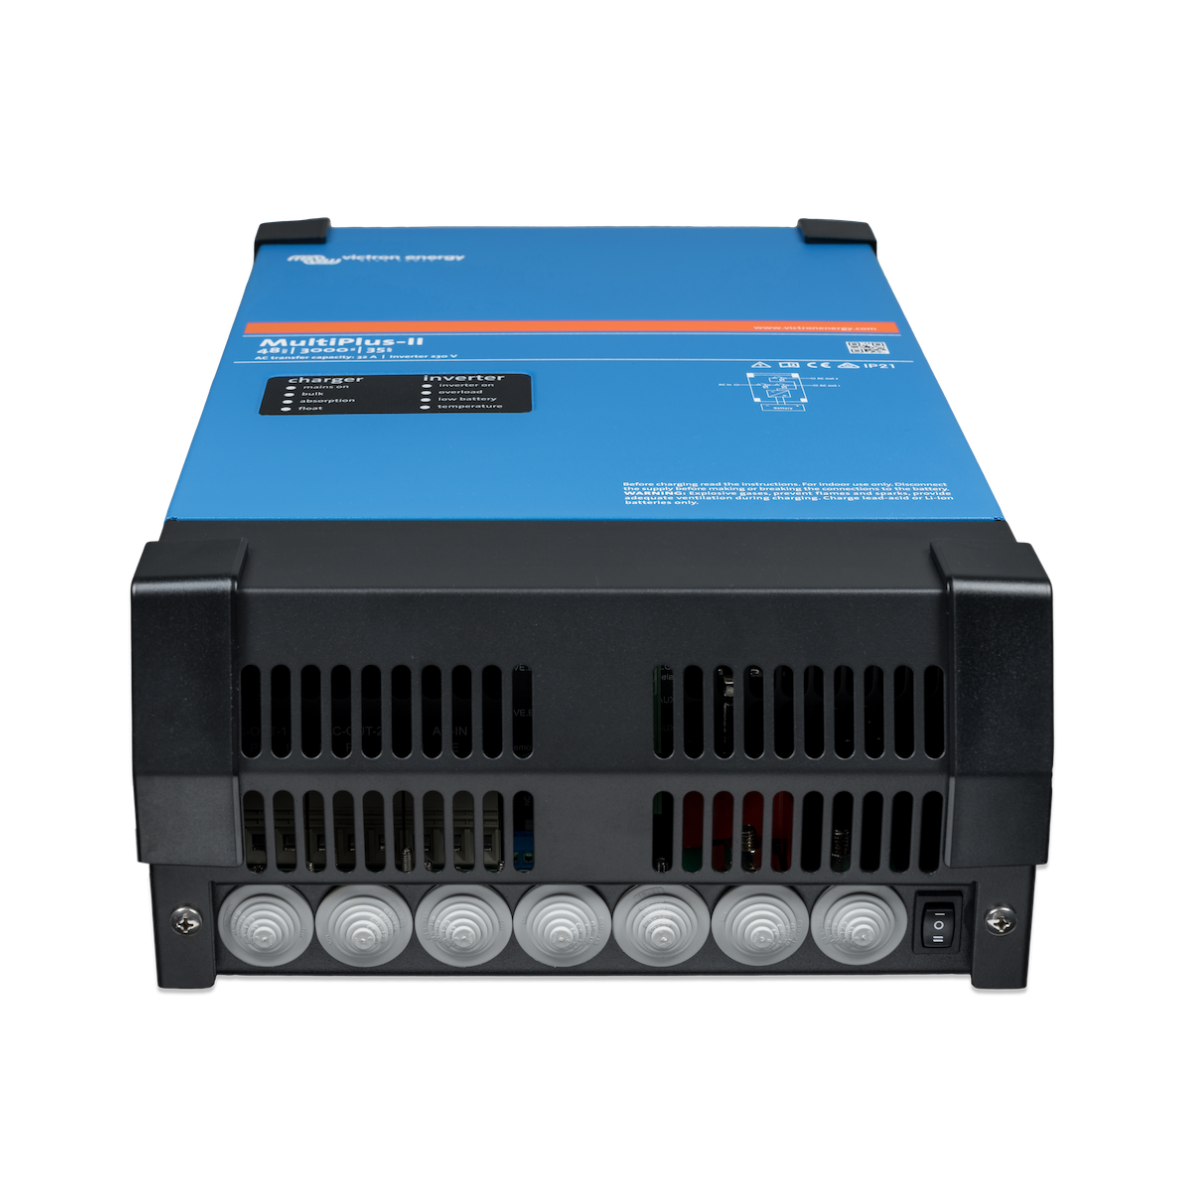 MultiPlus-II 48/3000/35-32 230V Inverter / Charger